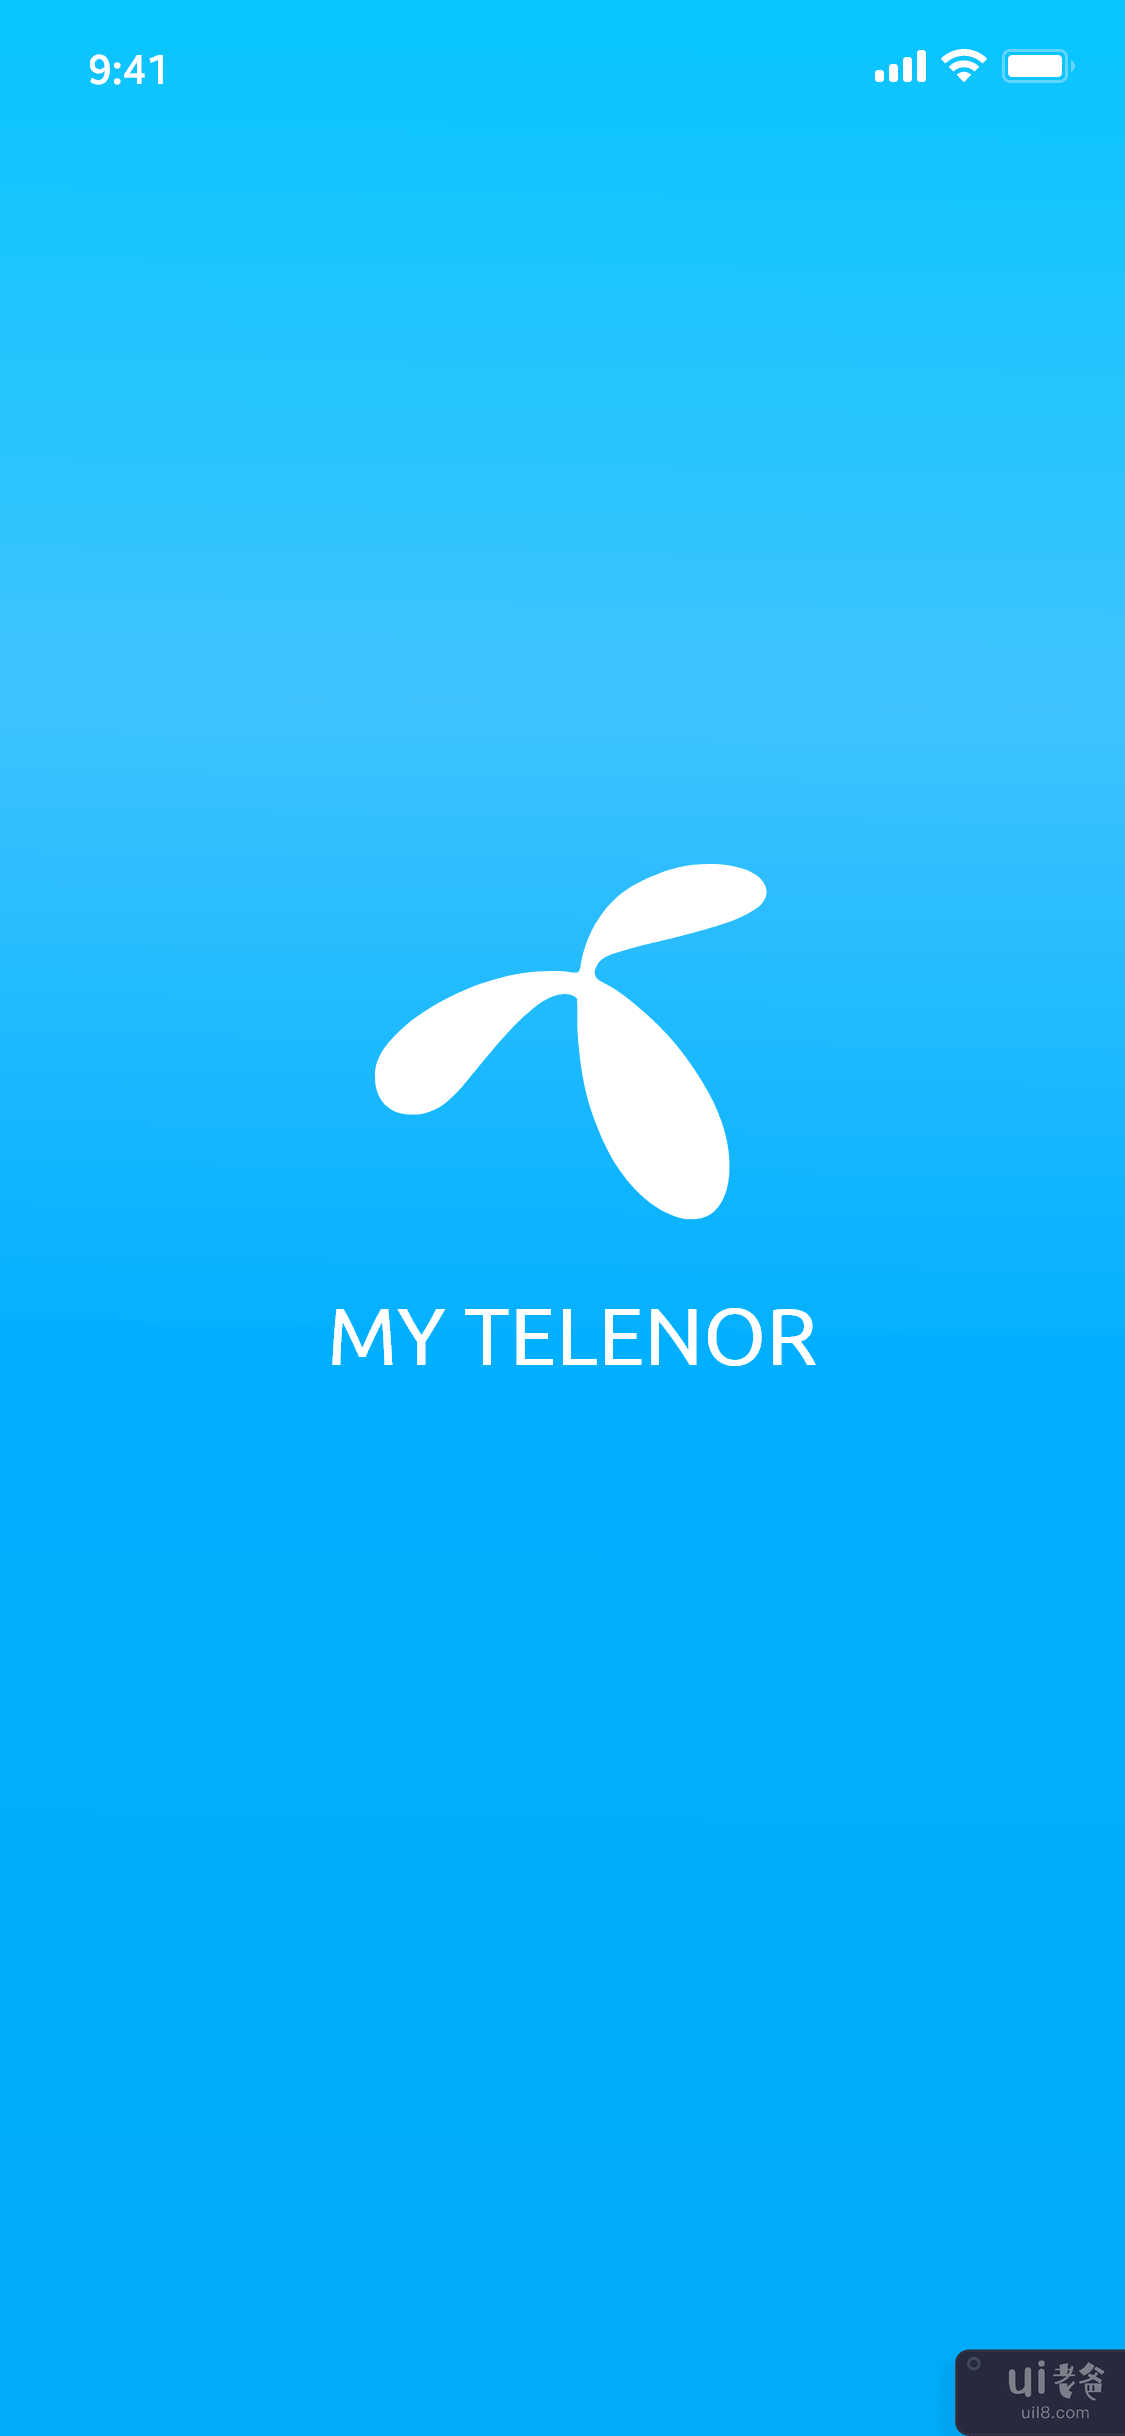 Telenor 应用程序 - 移动电信应用程序(Telenor App - Mobile Telecom app)插图3